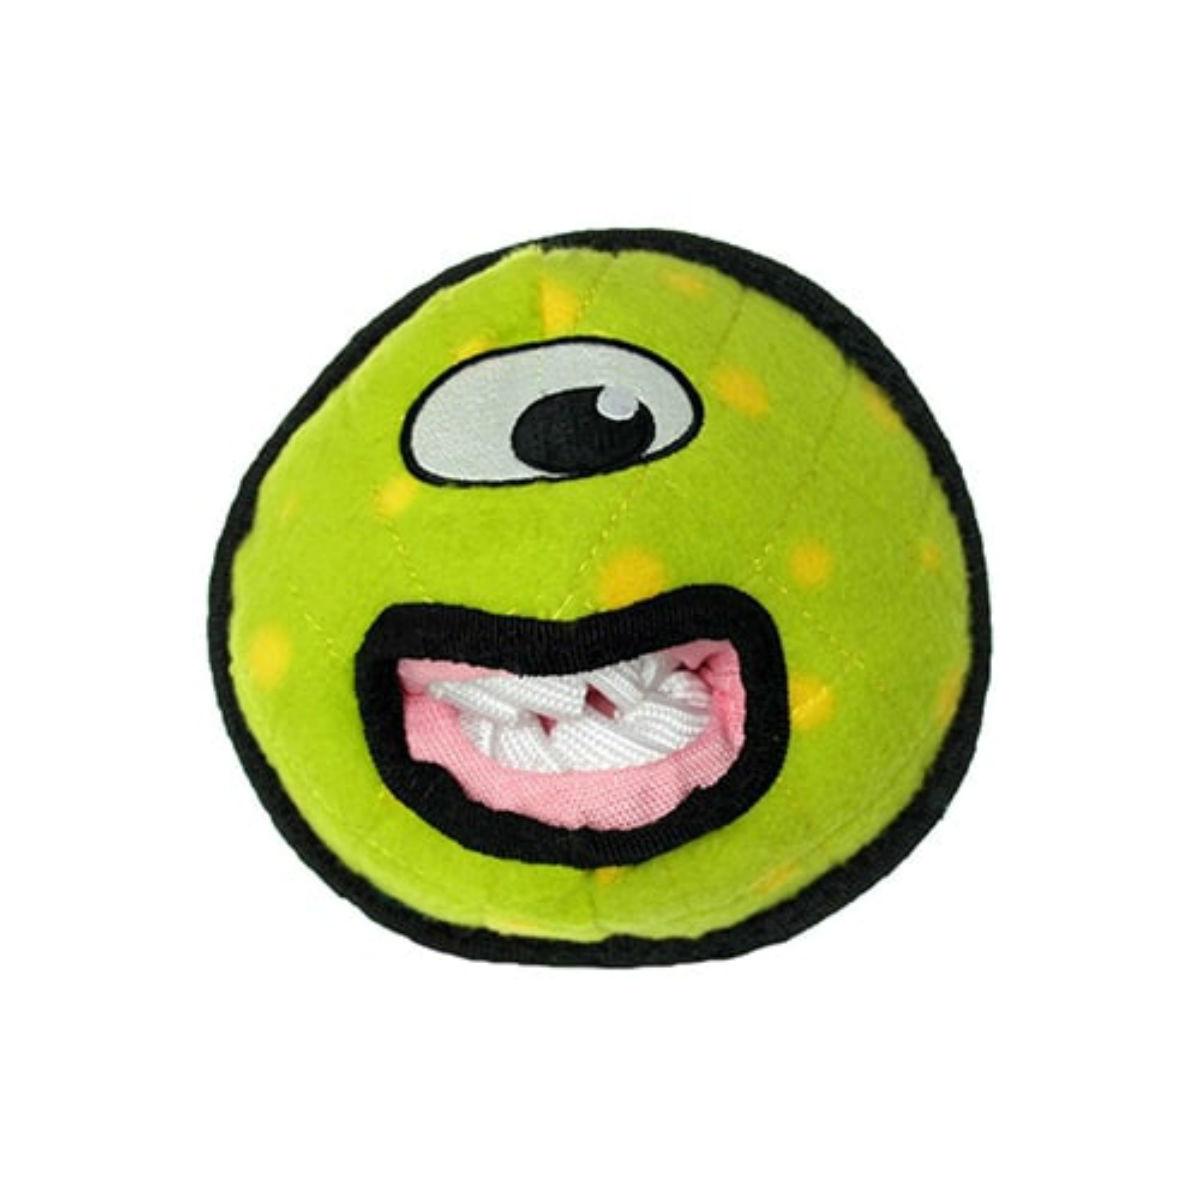 Tuffy Alien Series Dog Toy - Green Ball